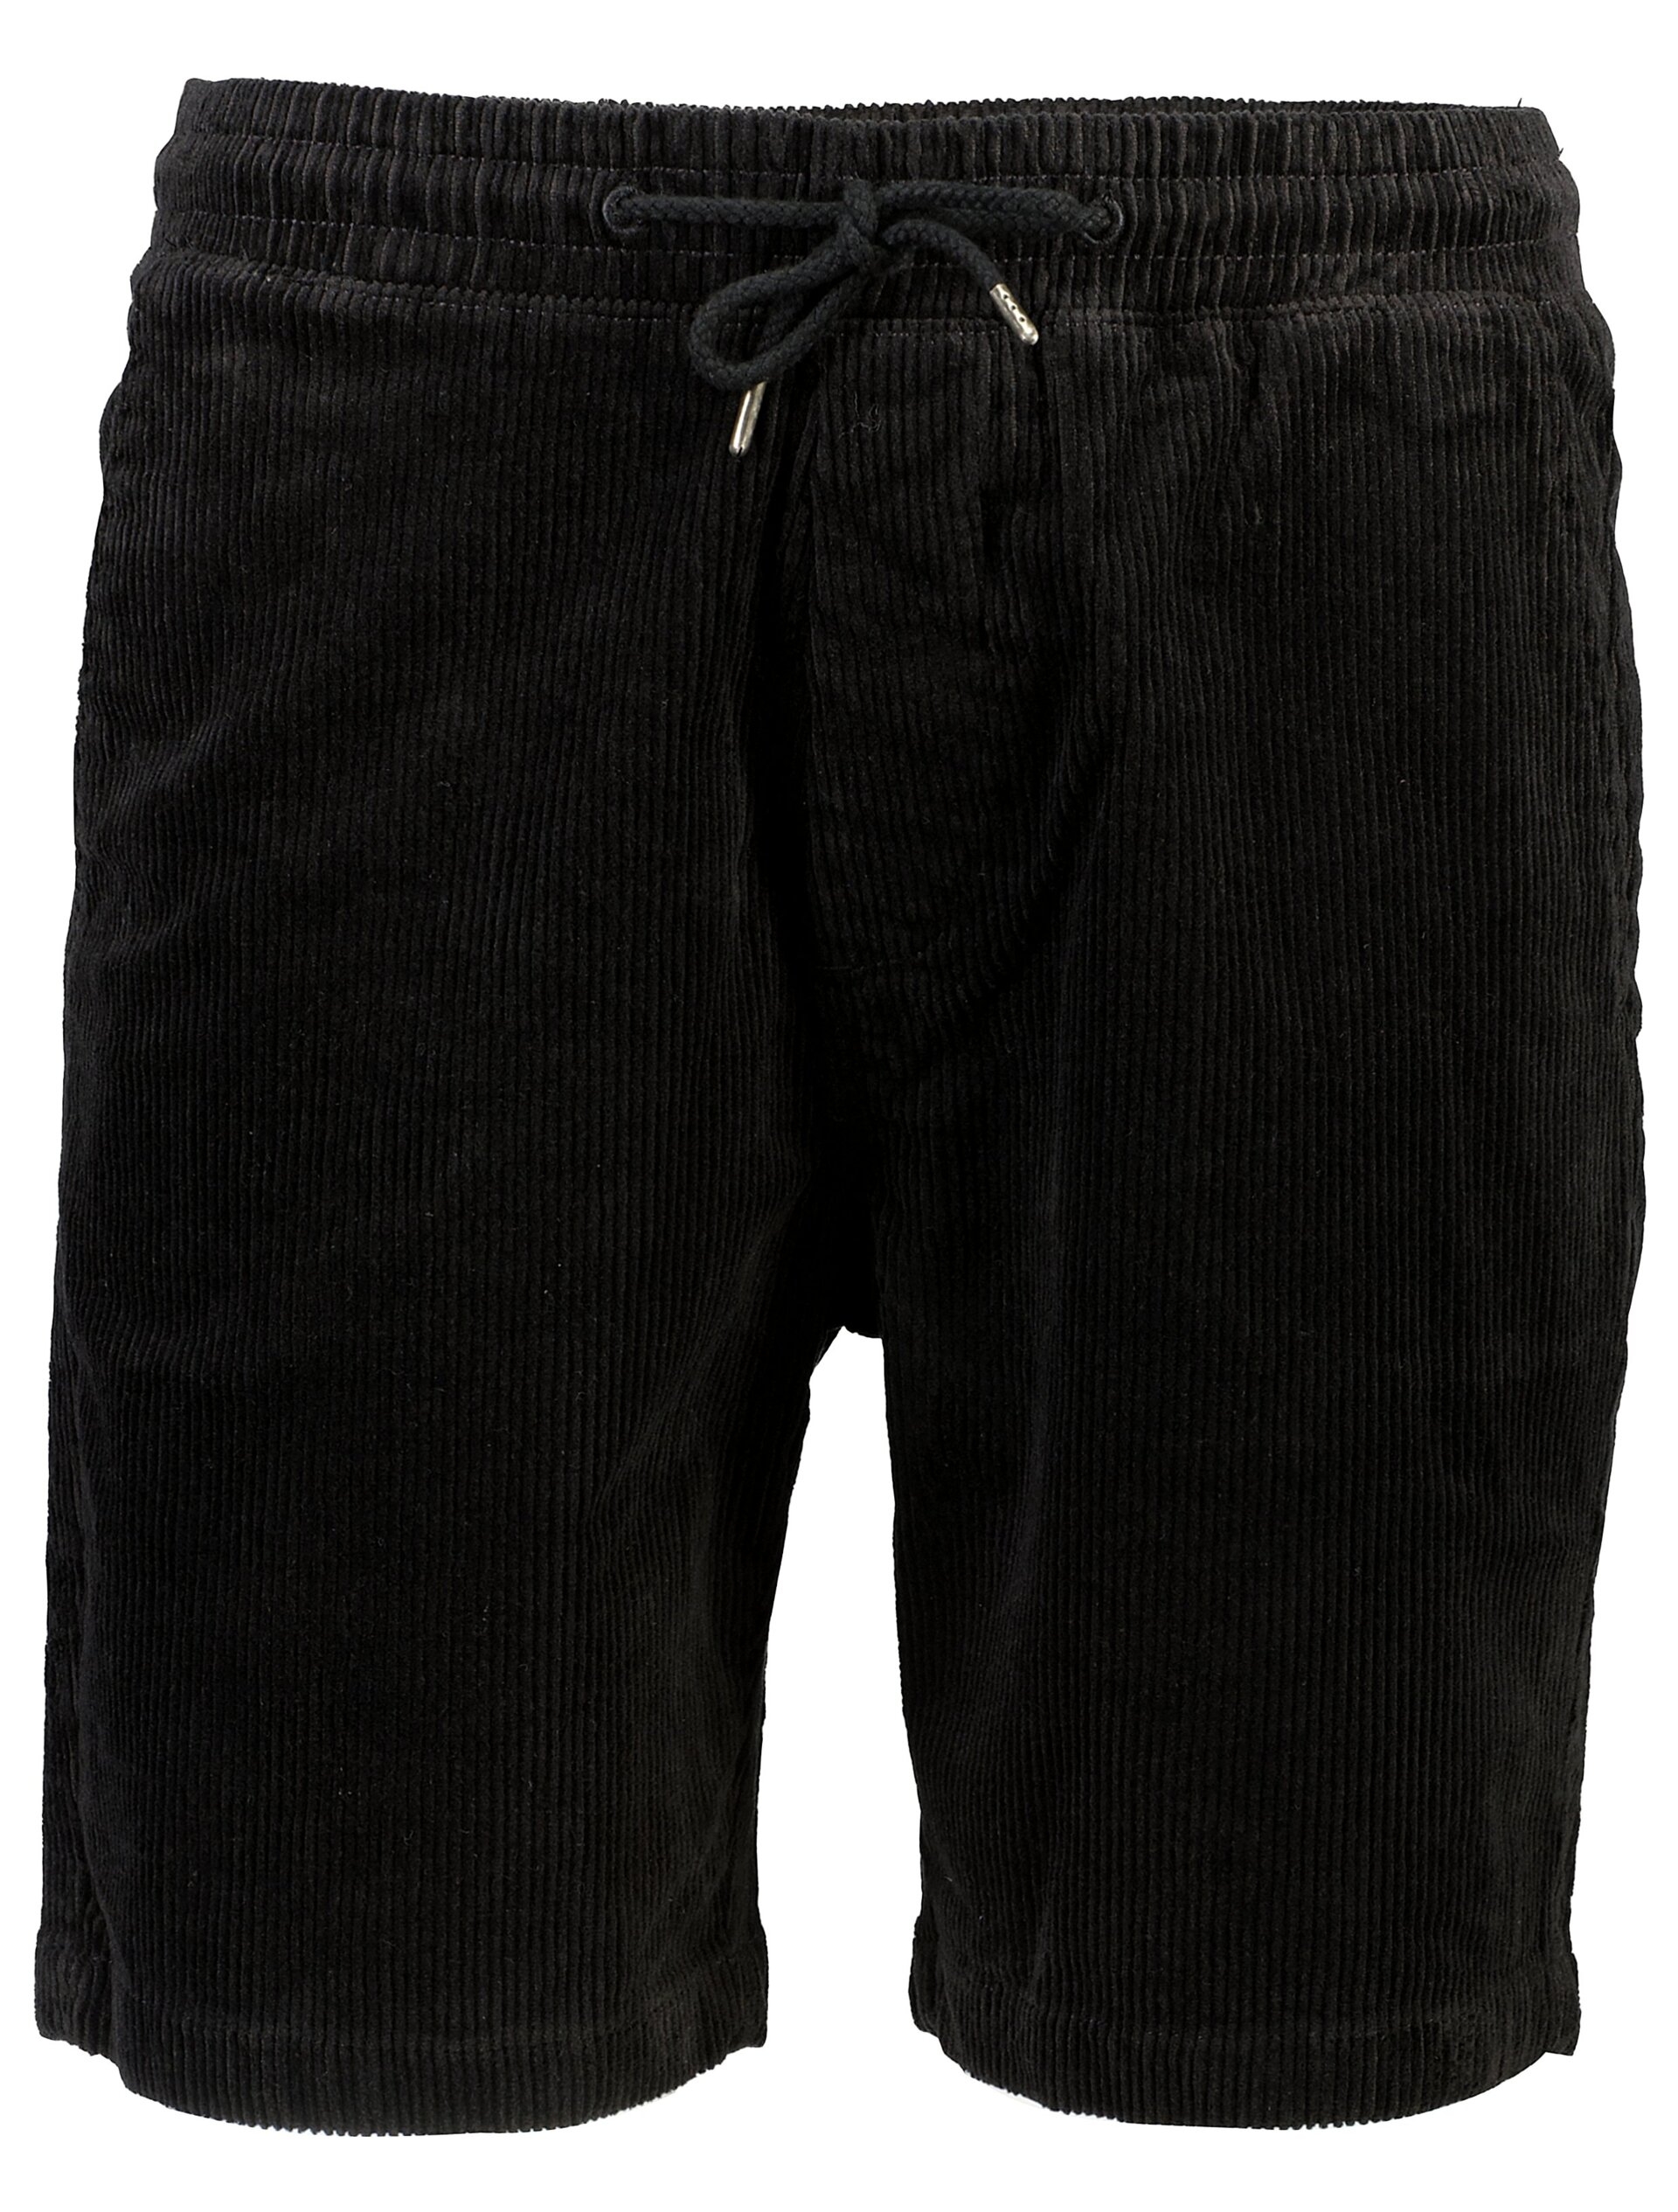 Mishumo Casual shorts sort / black